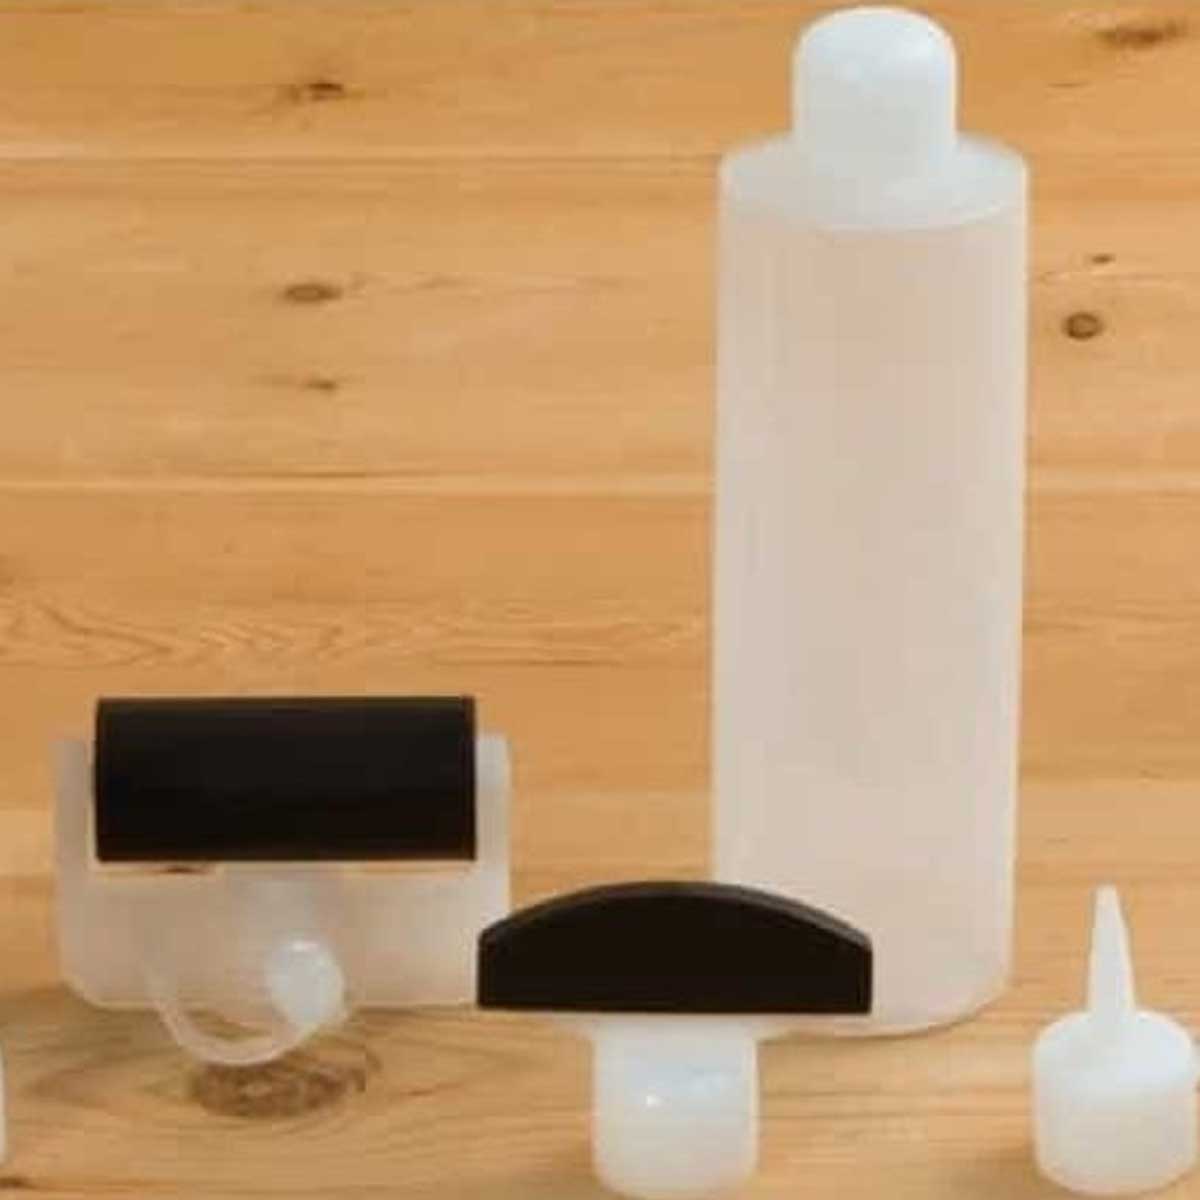 Glue Bottle Applicator Set Manufacturers, Suppliers in Himachal Pradesh